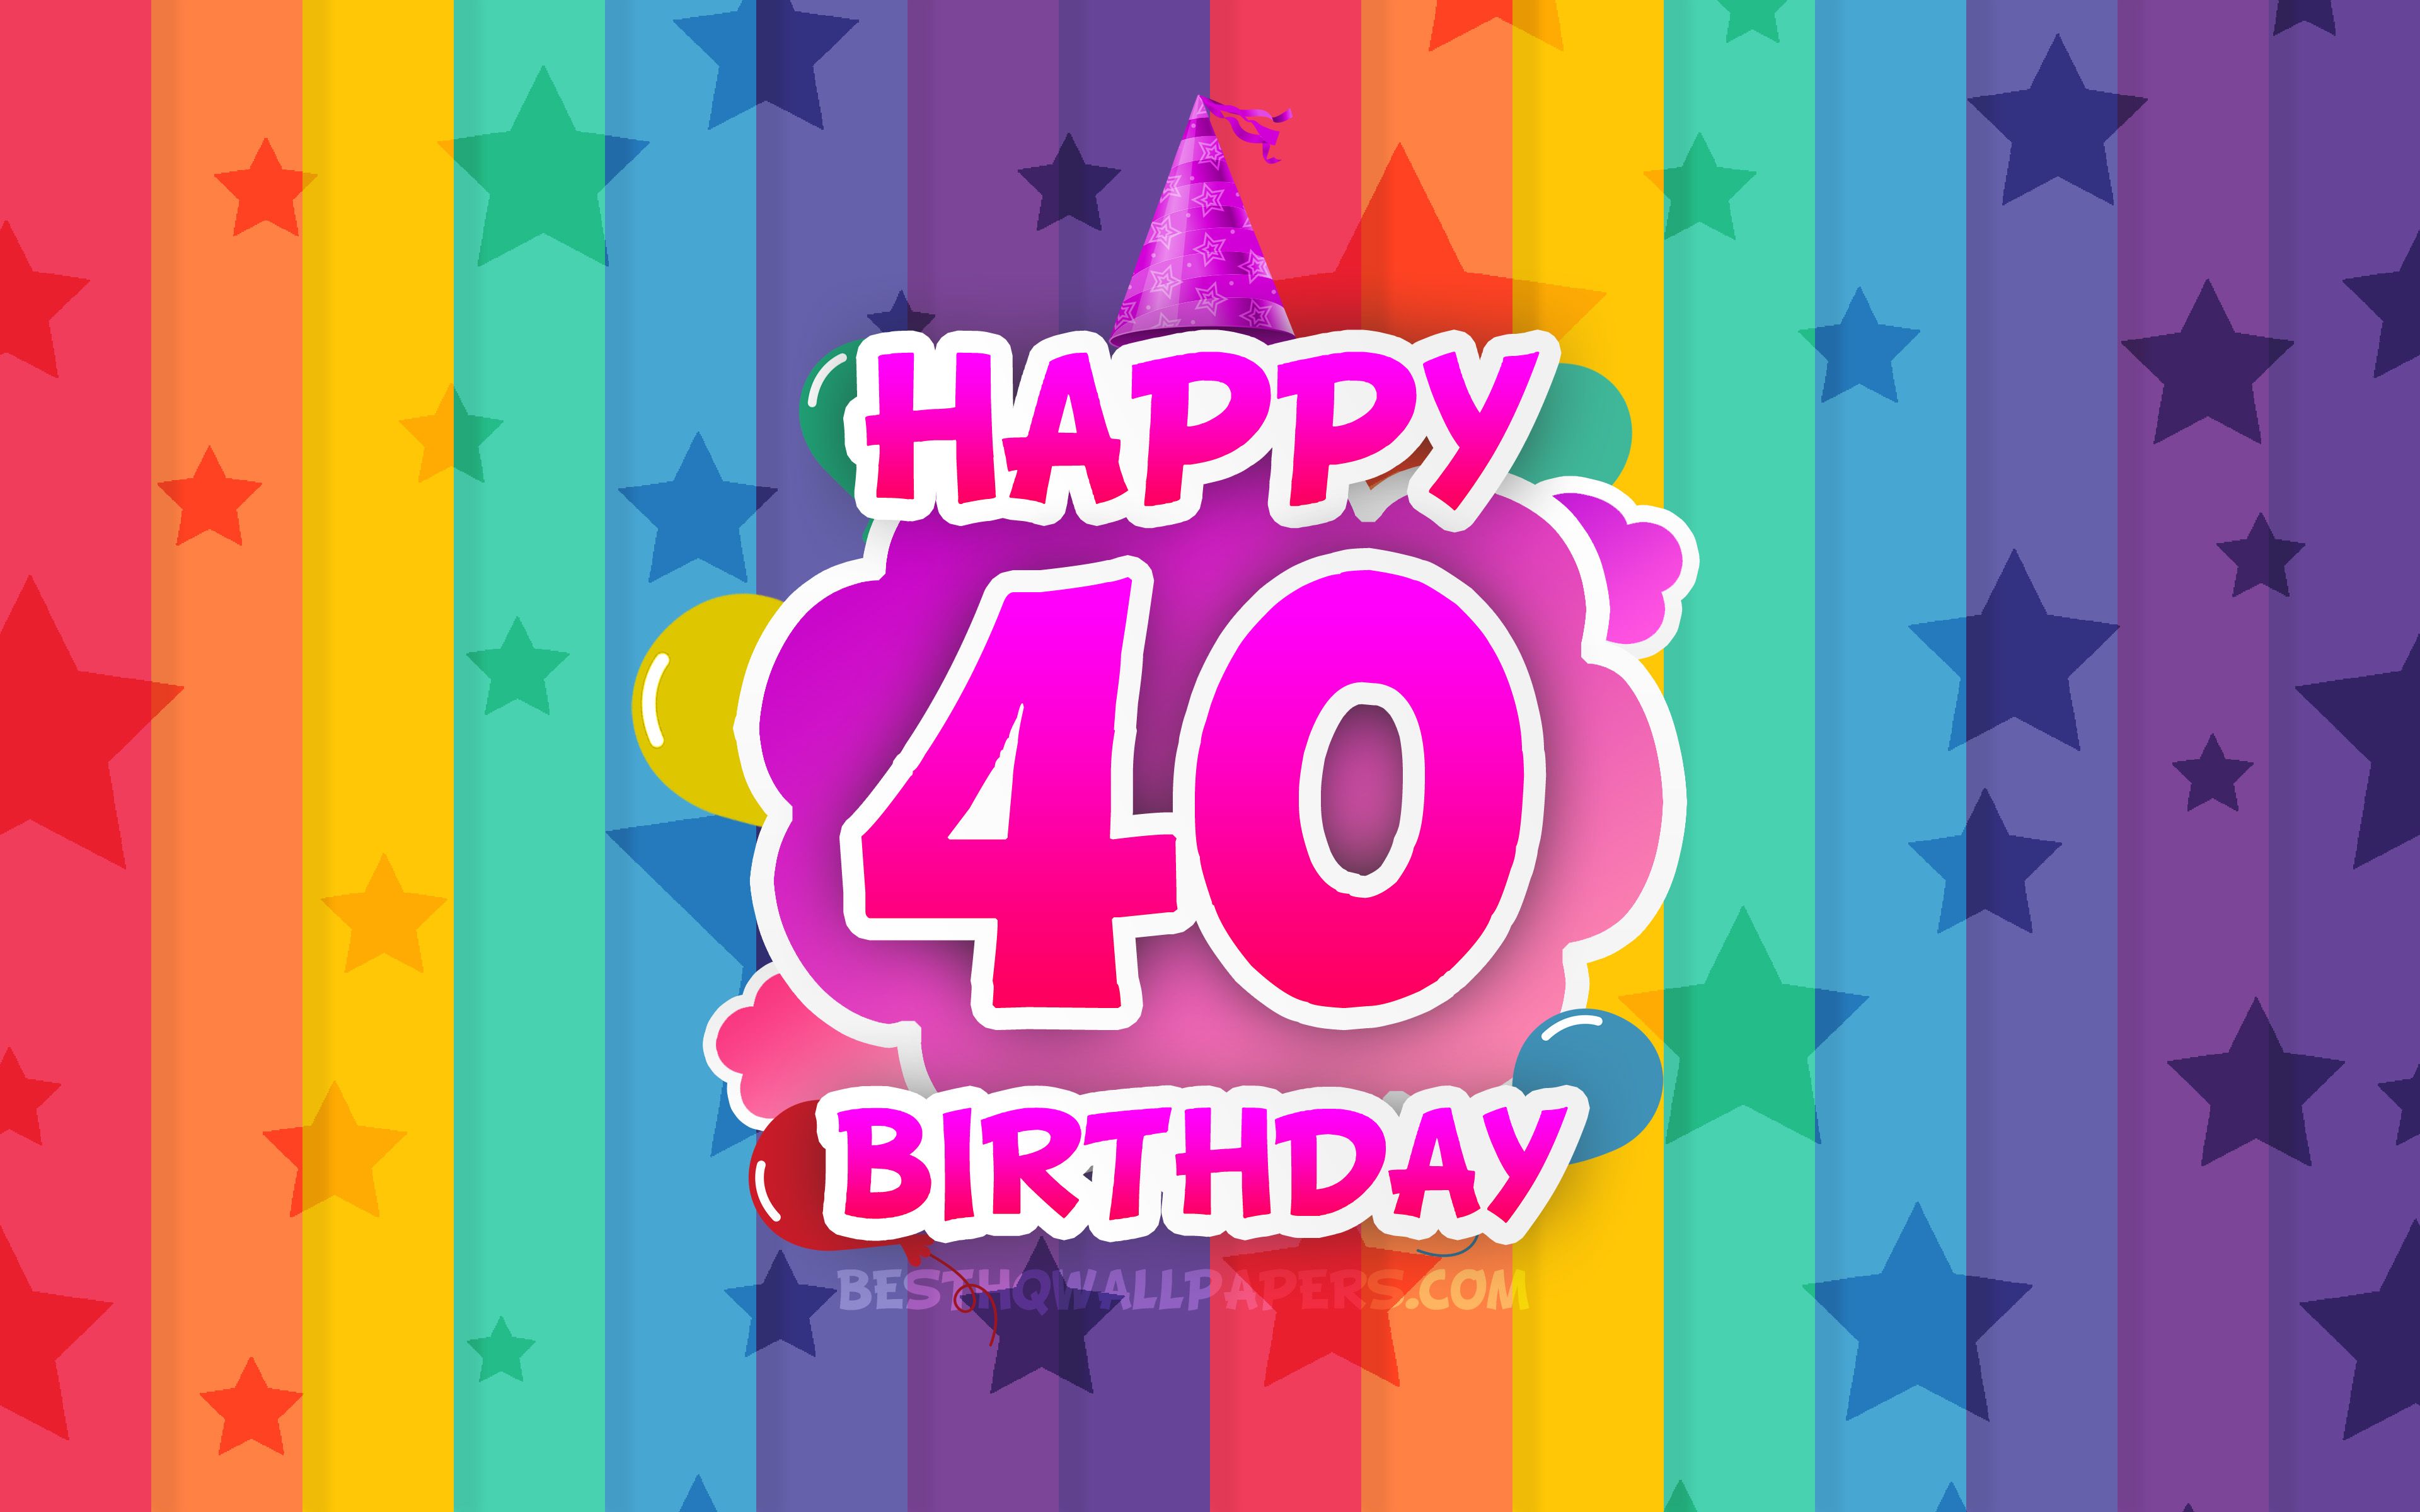 Download wallpaper Happy 40th birthday .besthqwallpaper.com